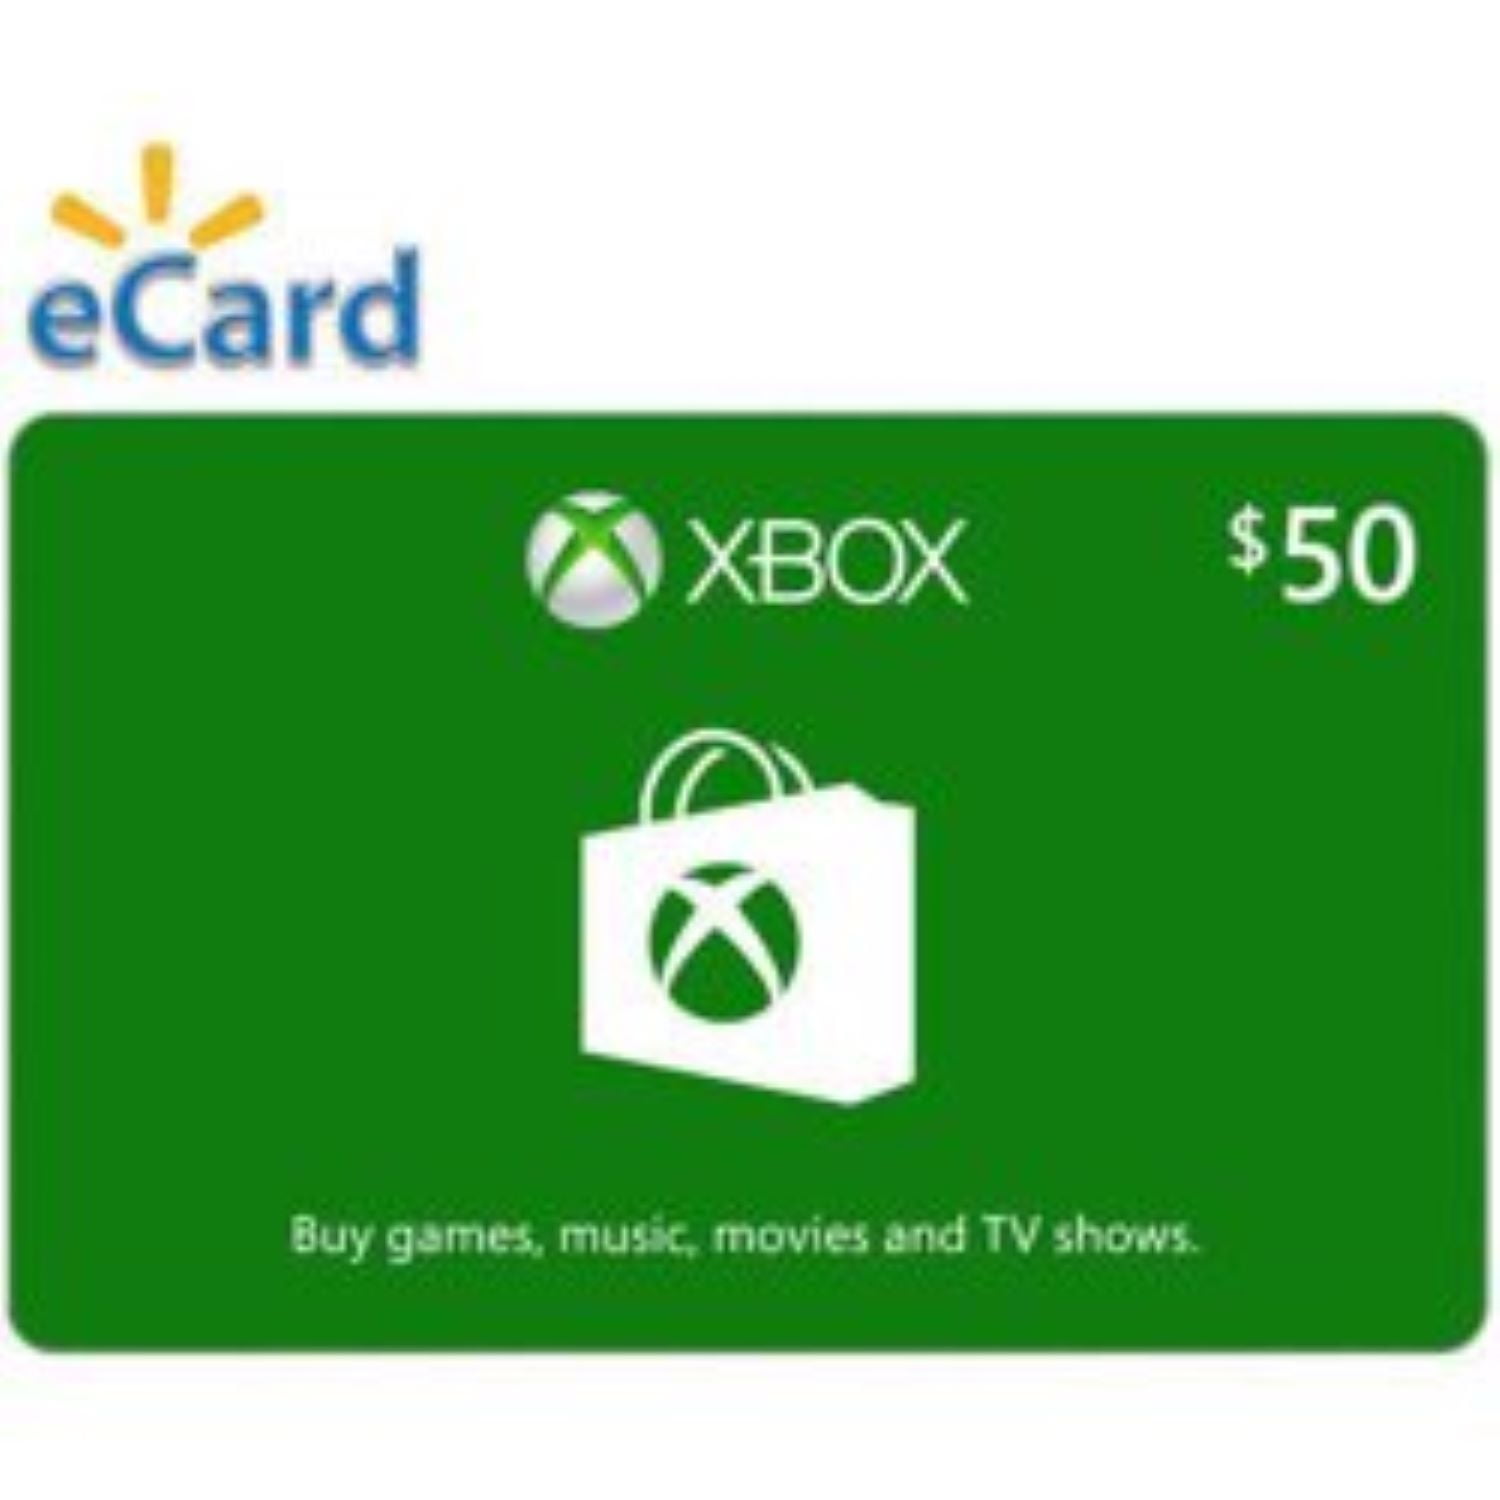 hardwerkend Verstrooien Groenten Xbox $25 Gift Card, Microsoft, [Digital Download] - Walmart.com